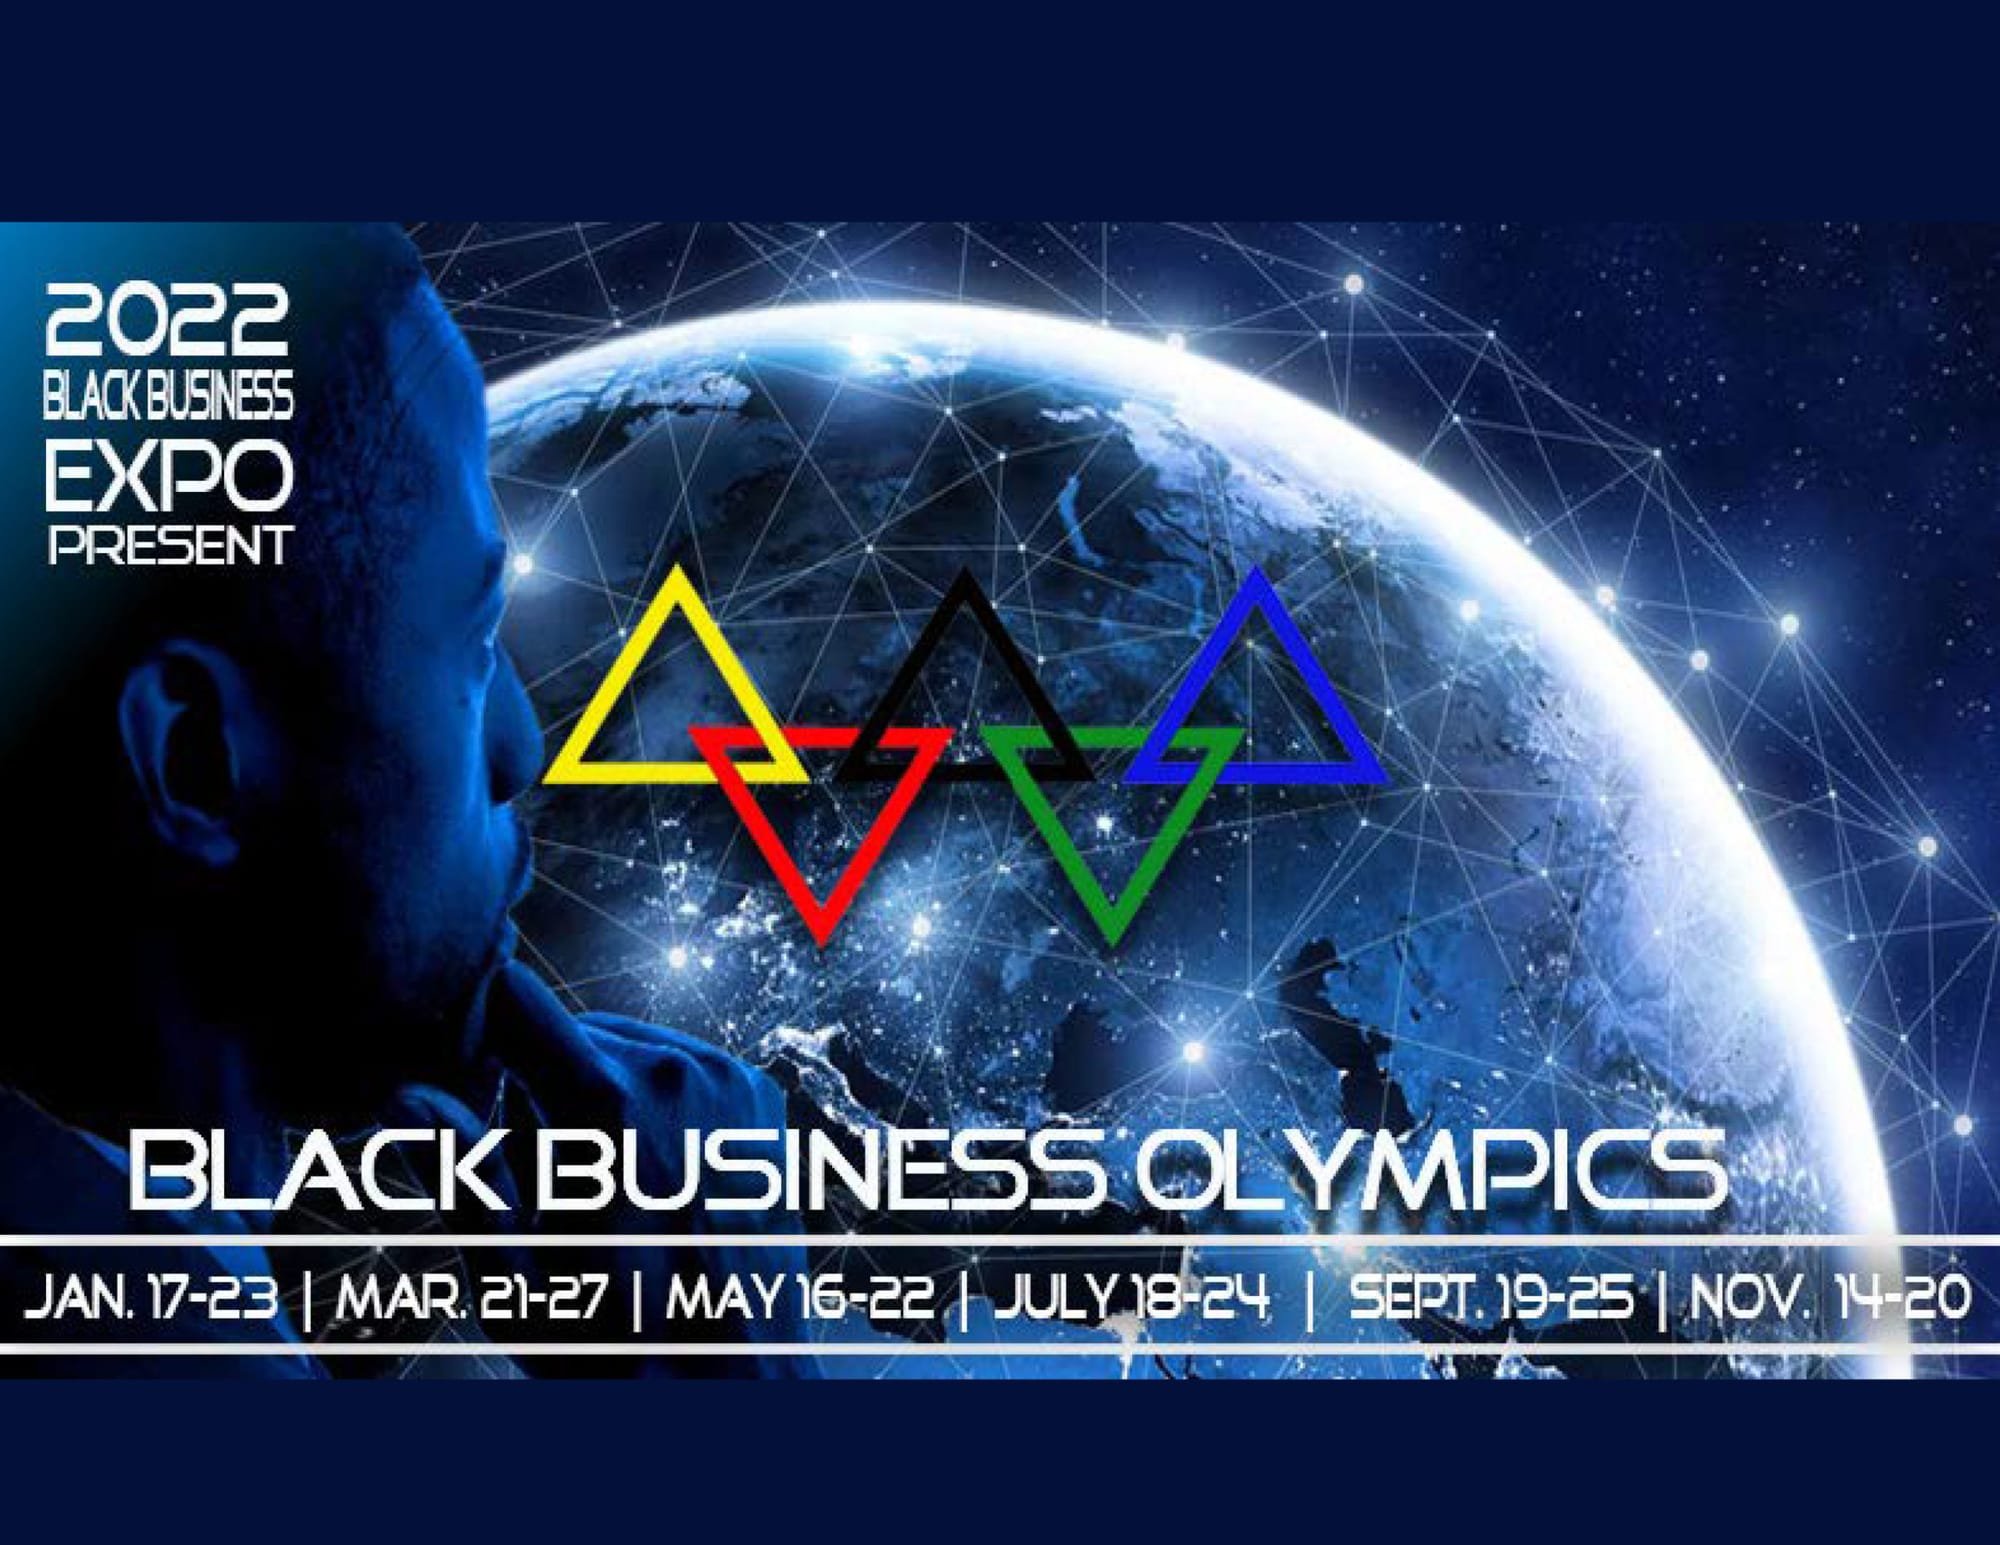 Black Business Olympics Expo USA